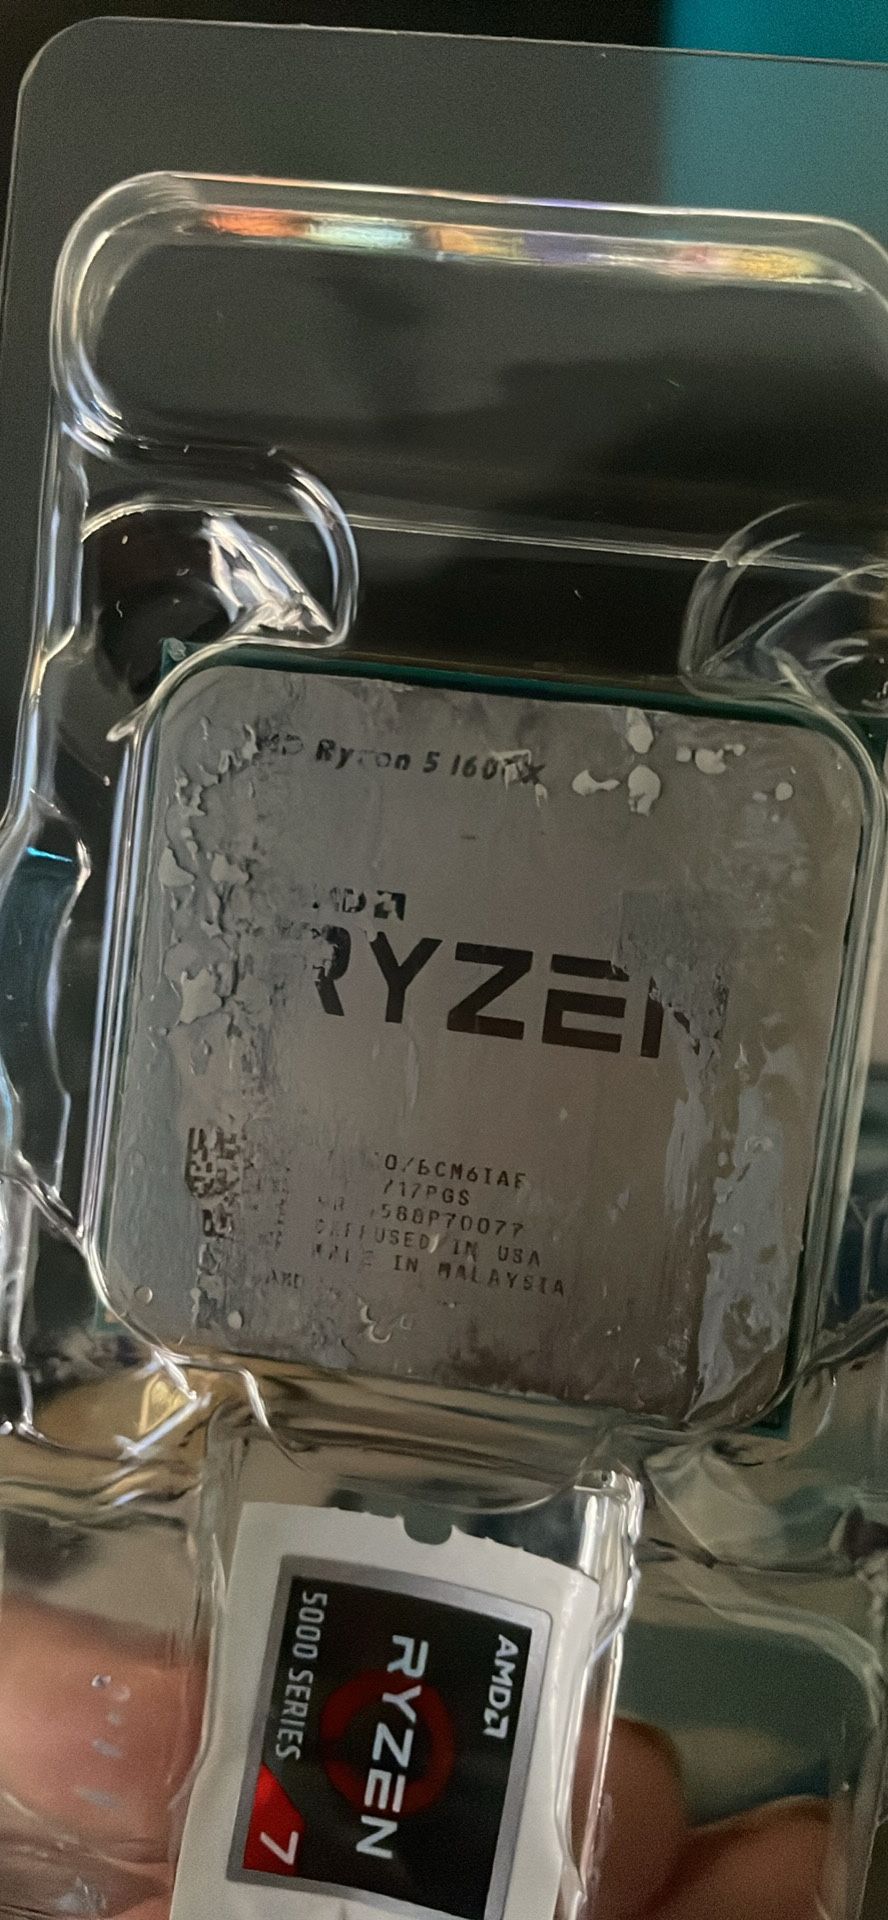 AMD Ryzen 5 1600x